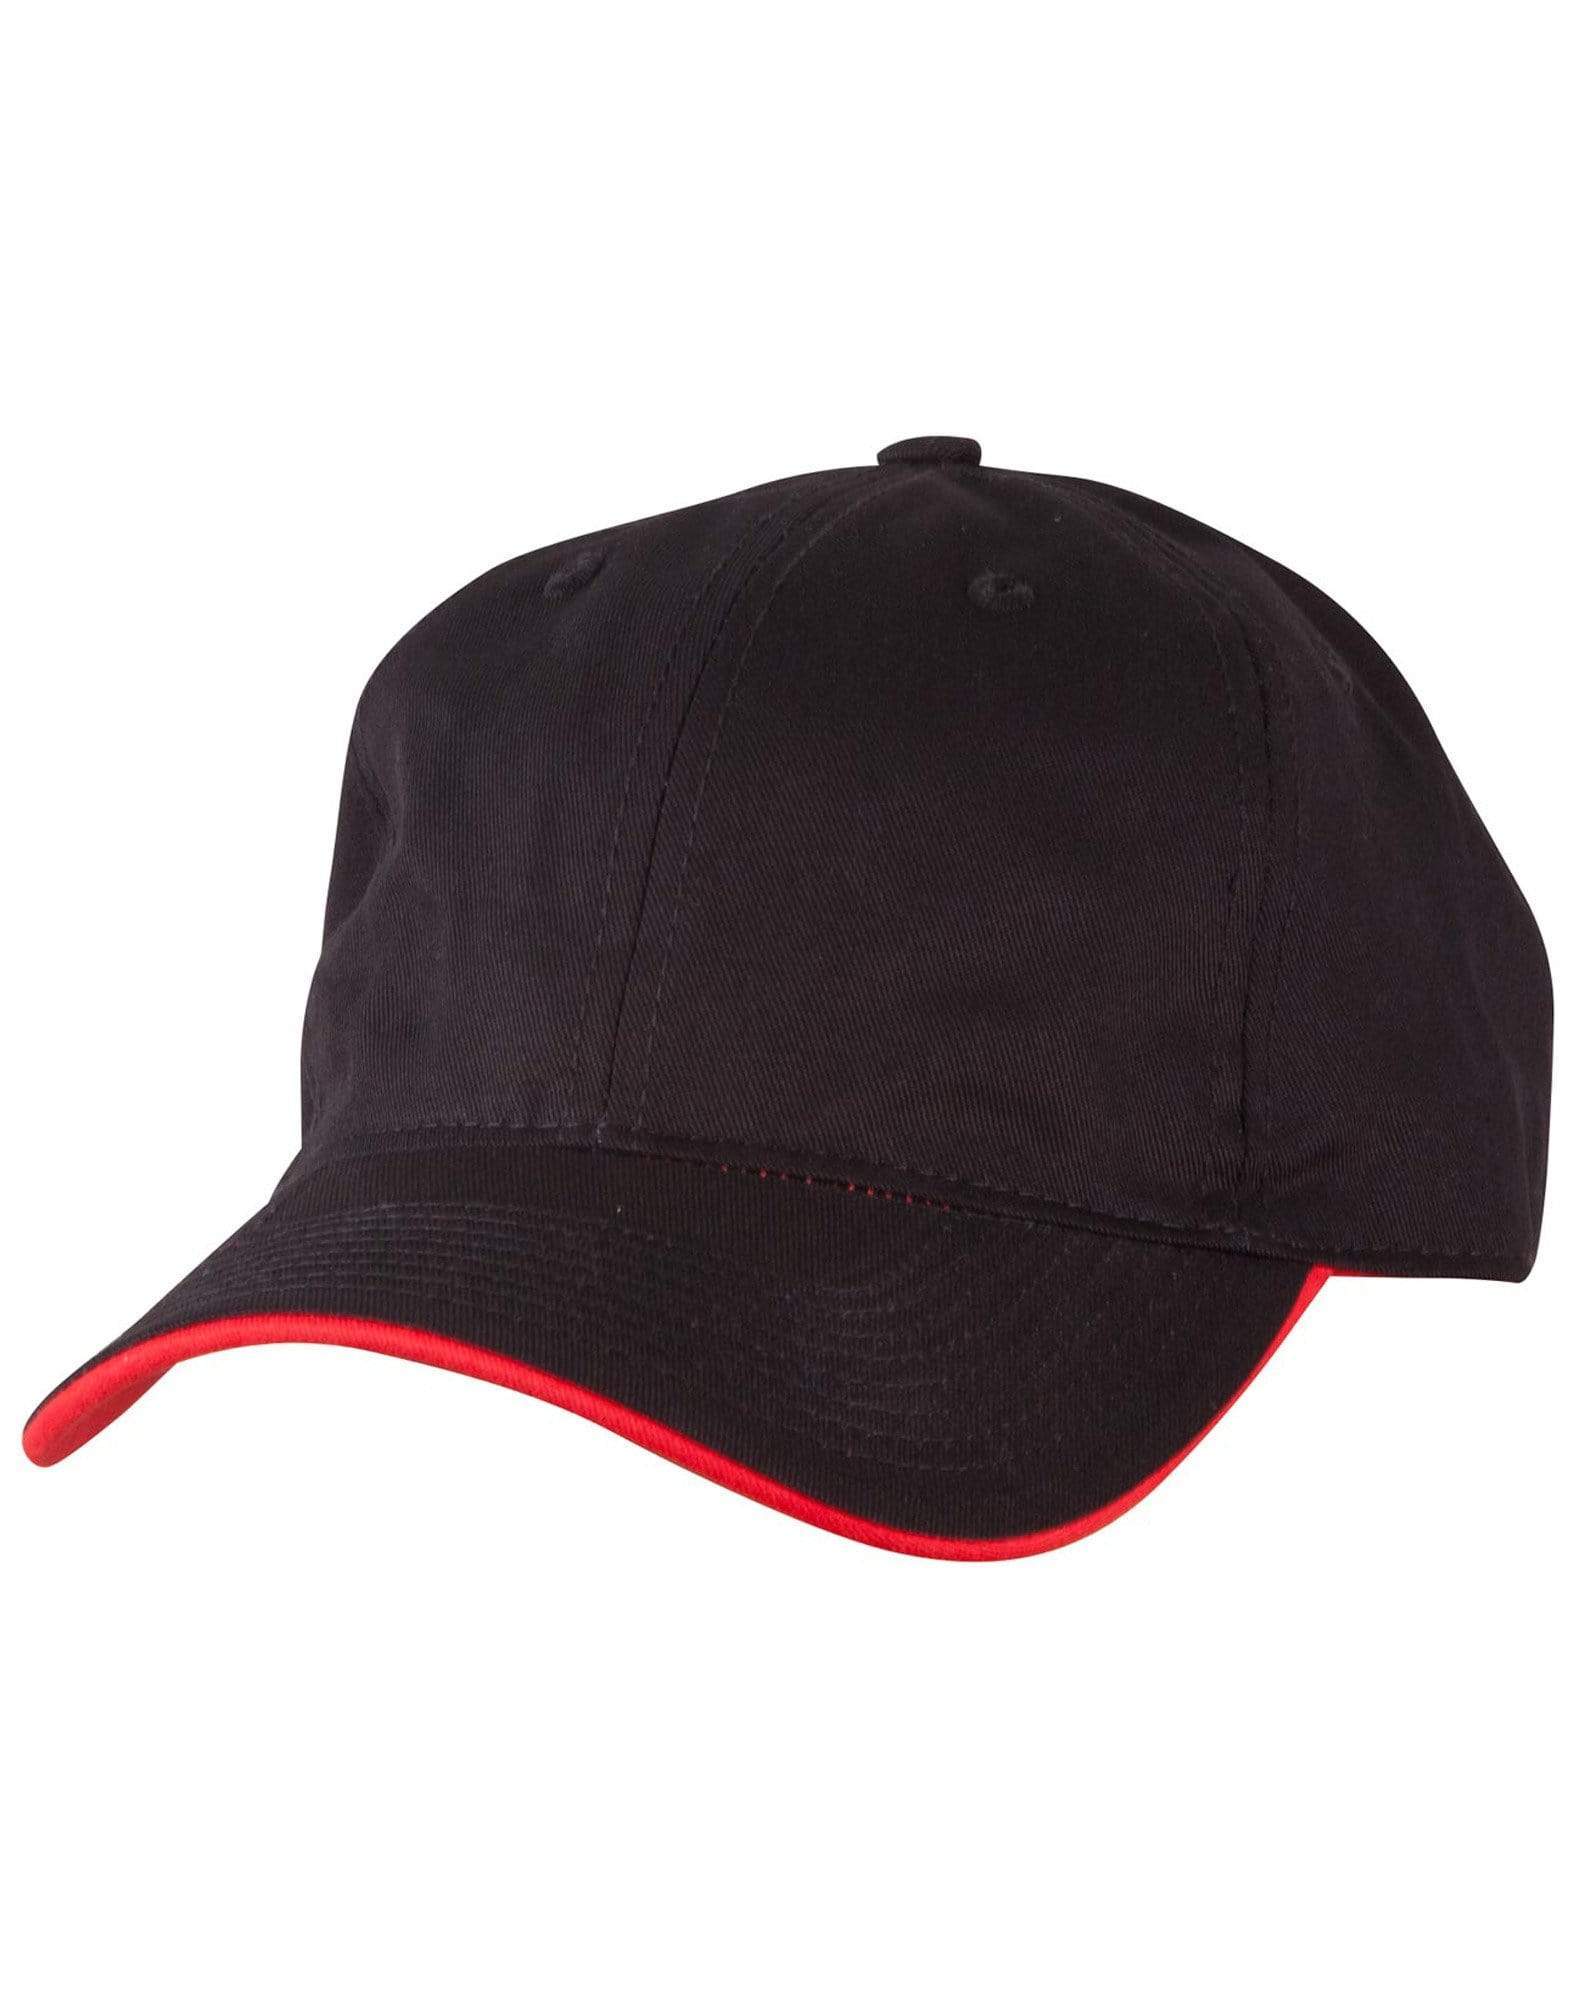 Underpeak Contrast Colour Cap CH51 Active Wear Winning Spirit Black/Red One size 